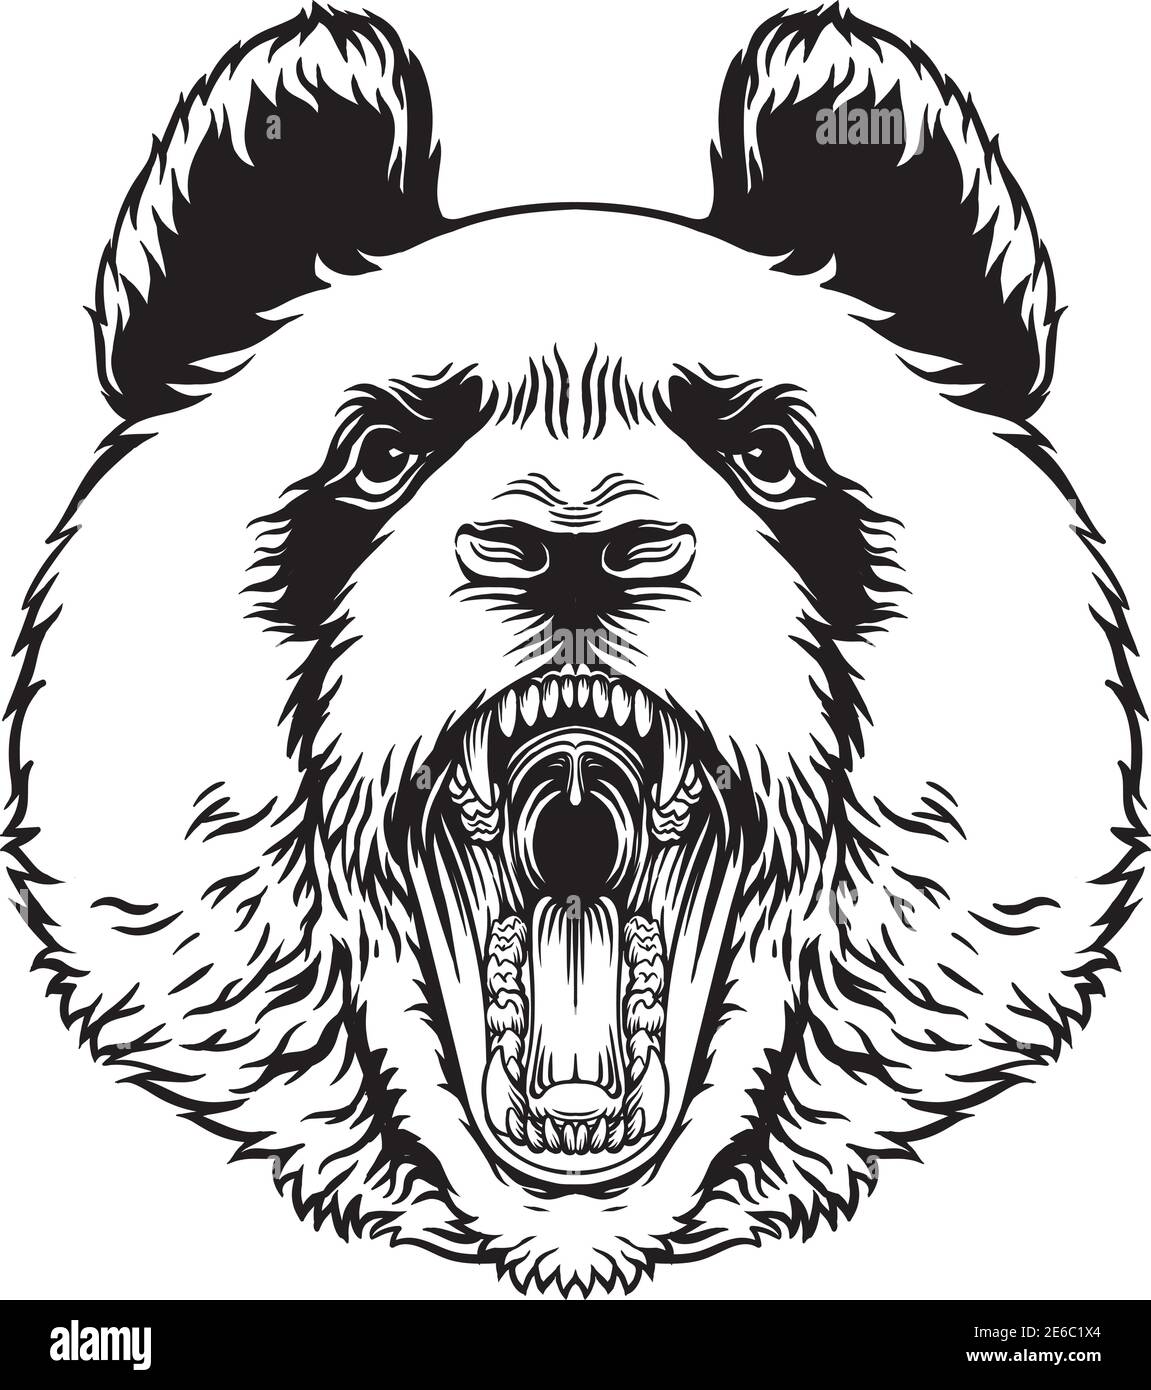 Angry Roaring Panda Head Vector Mascot Character Stock Vector Image & Art -  Alamy